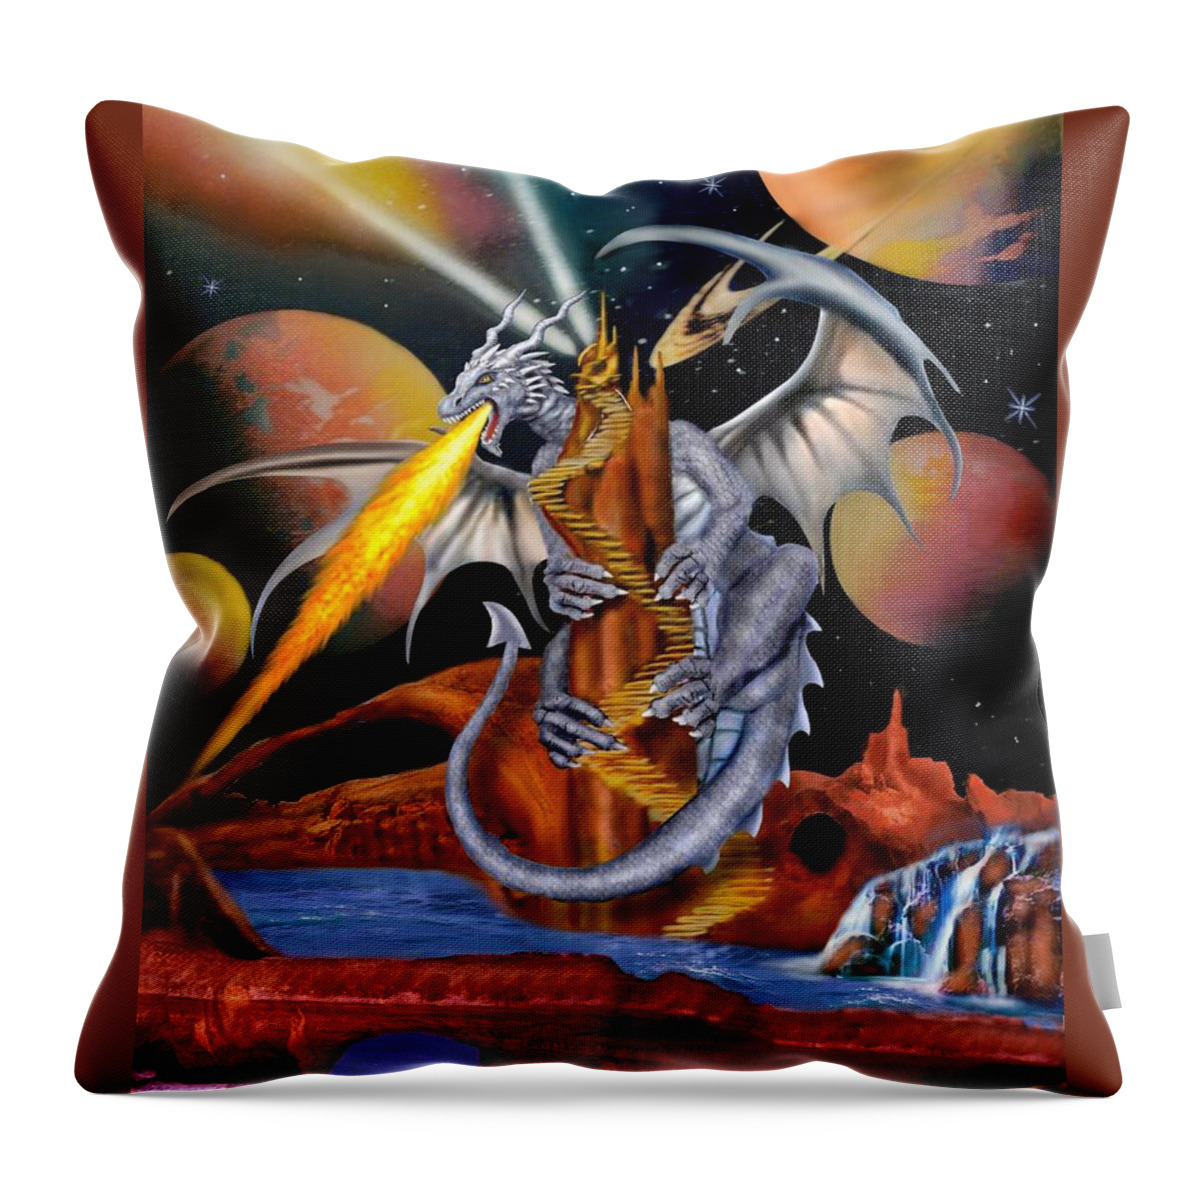 Dragon Throw Pillow featuring the digital art Celestian Dragon by Glenn Holbrook